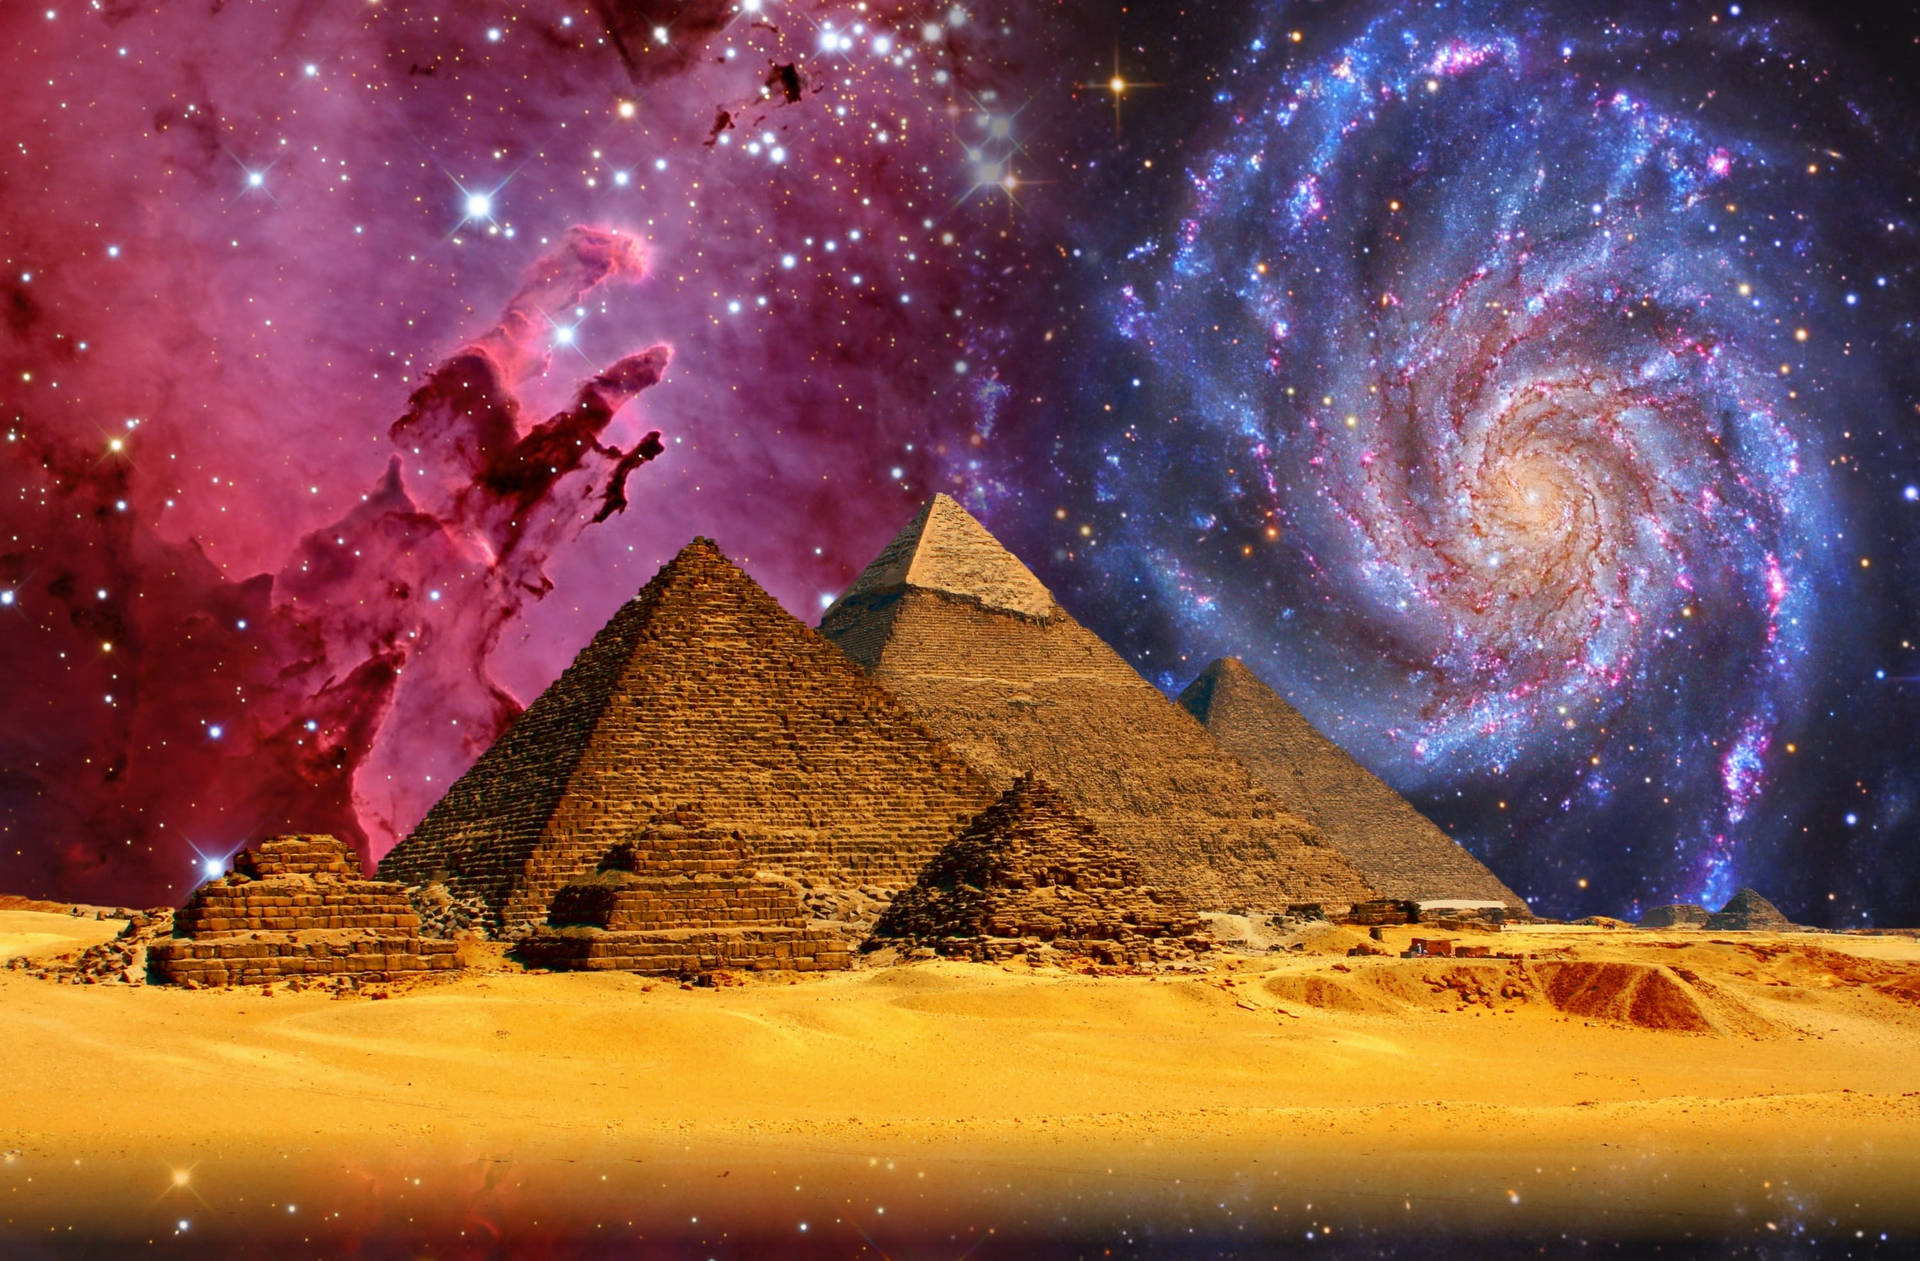 Andromeda Galaxy Over An Egyptian Pyramid Wallpaper